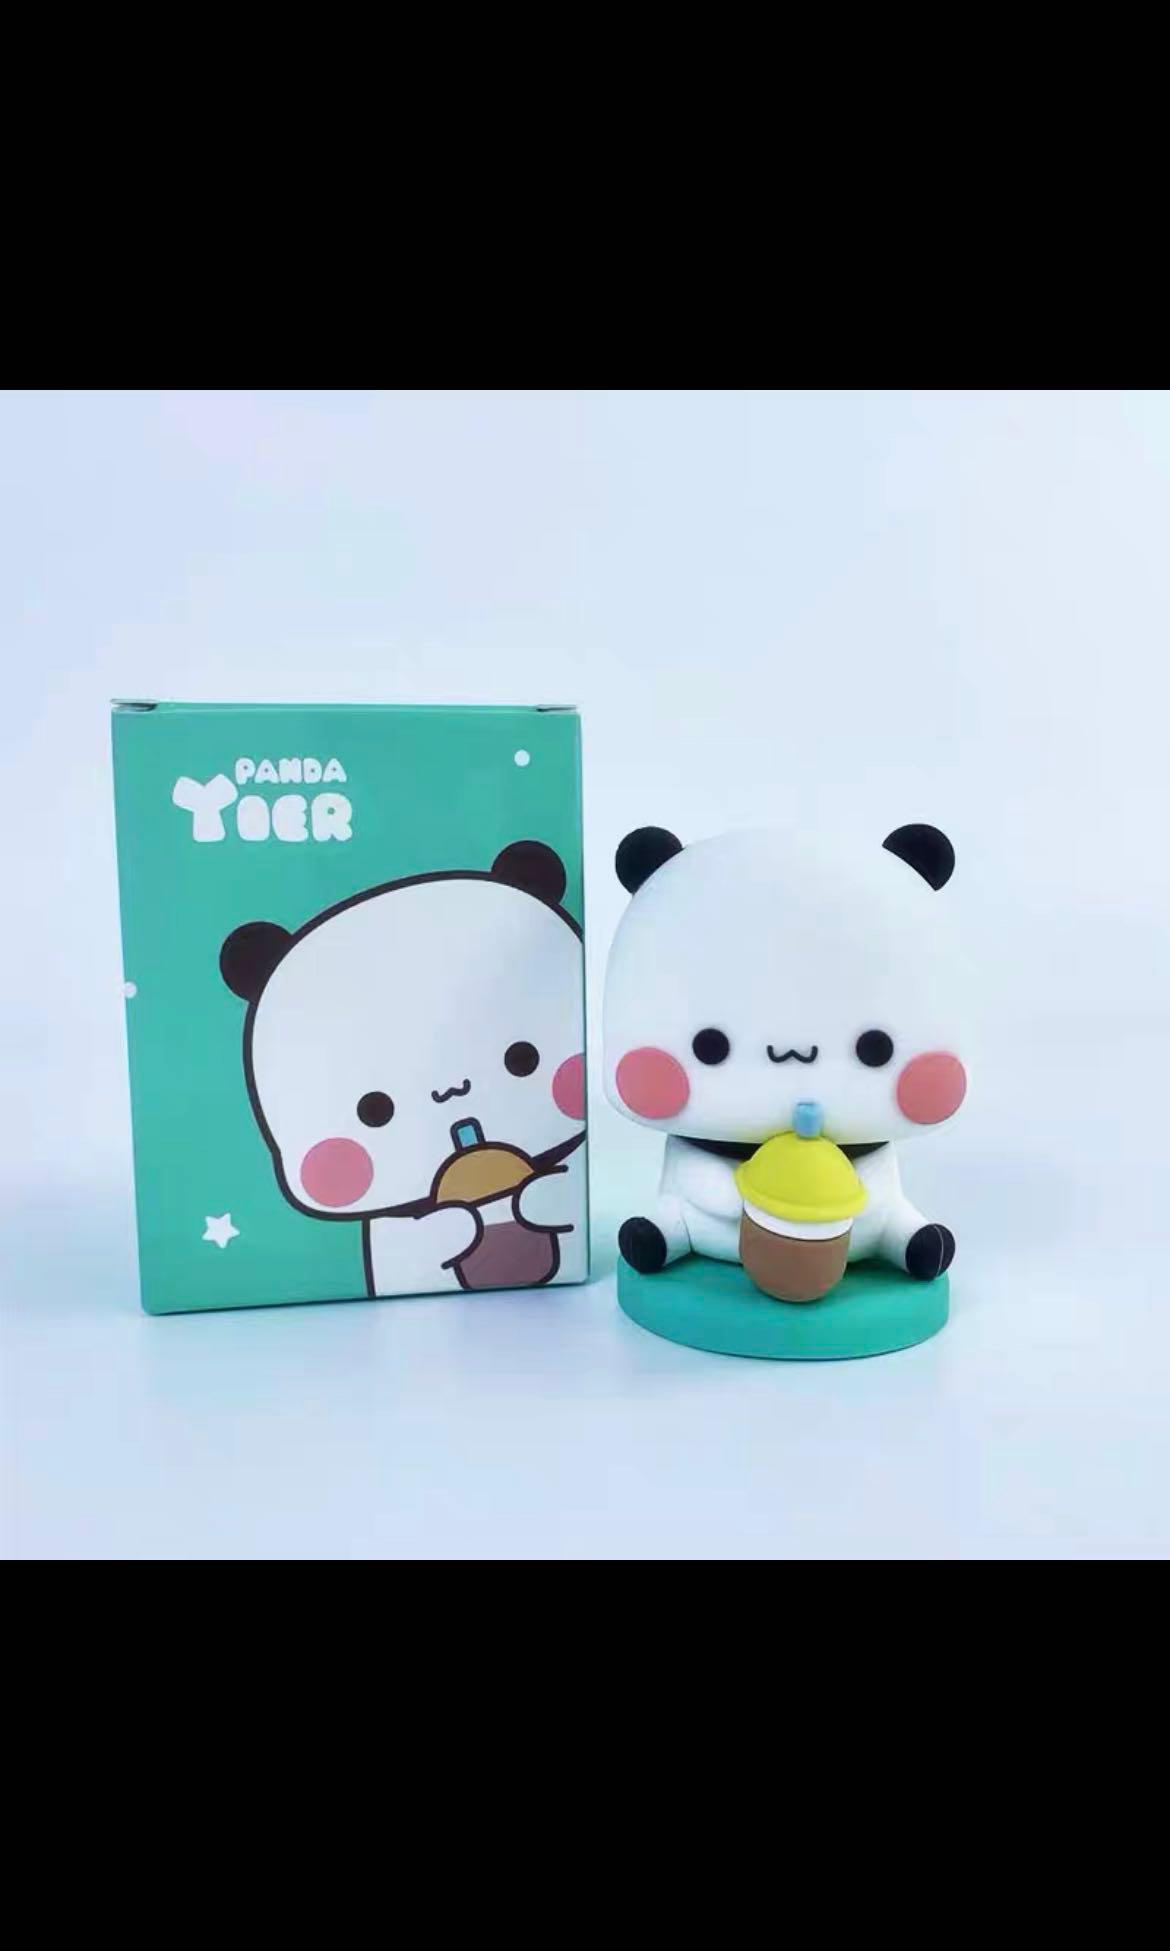 Boneka figur beruang Panda Bubu Dudu, mainan Model beruang Panda